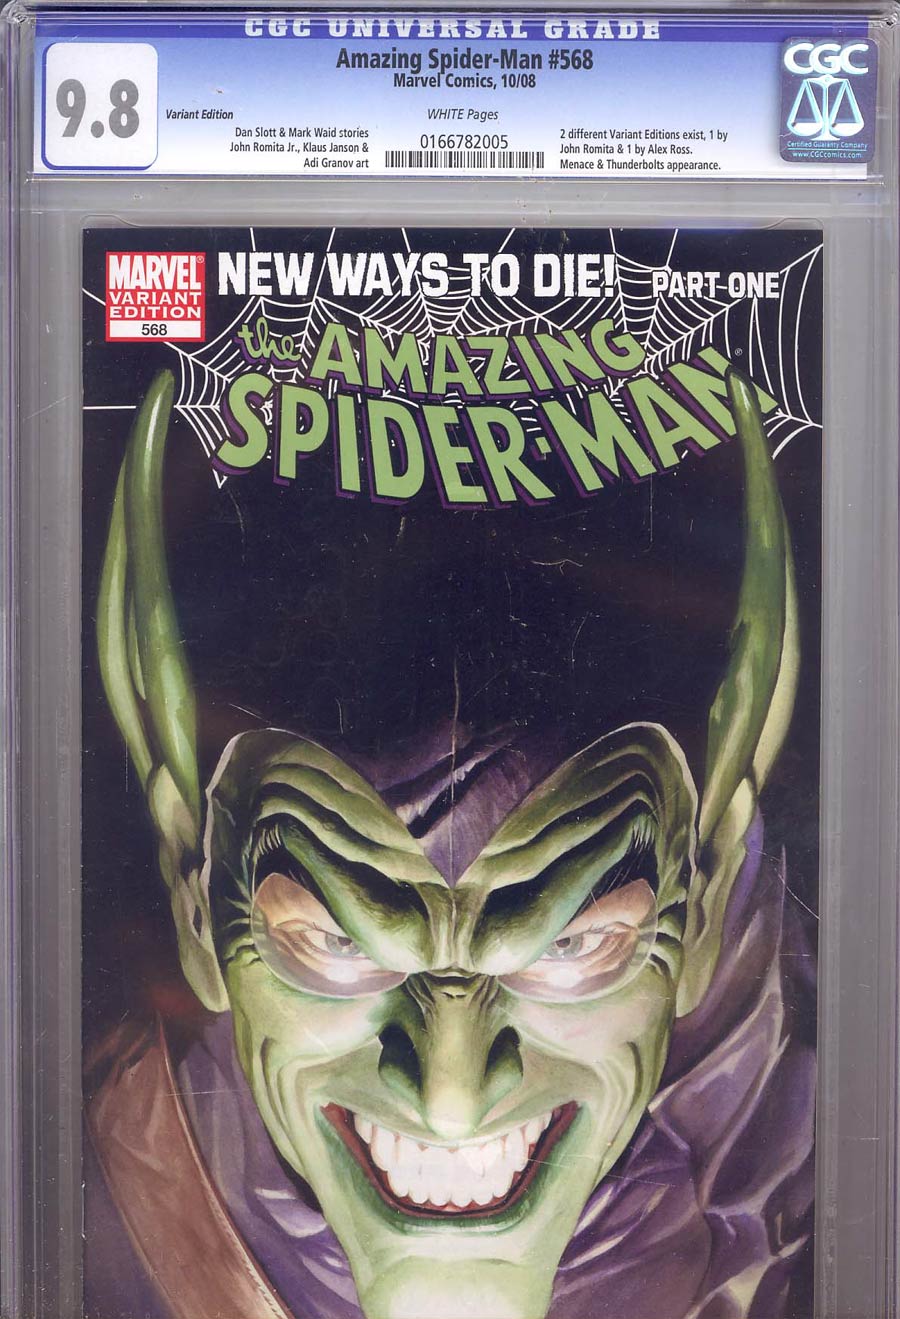 Amazing Spider-Man Vol 2 #568 CGC 9.8 1st Ptg Variant Alex Ross Green Goblin Cover